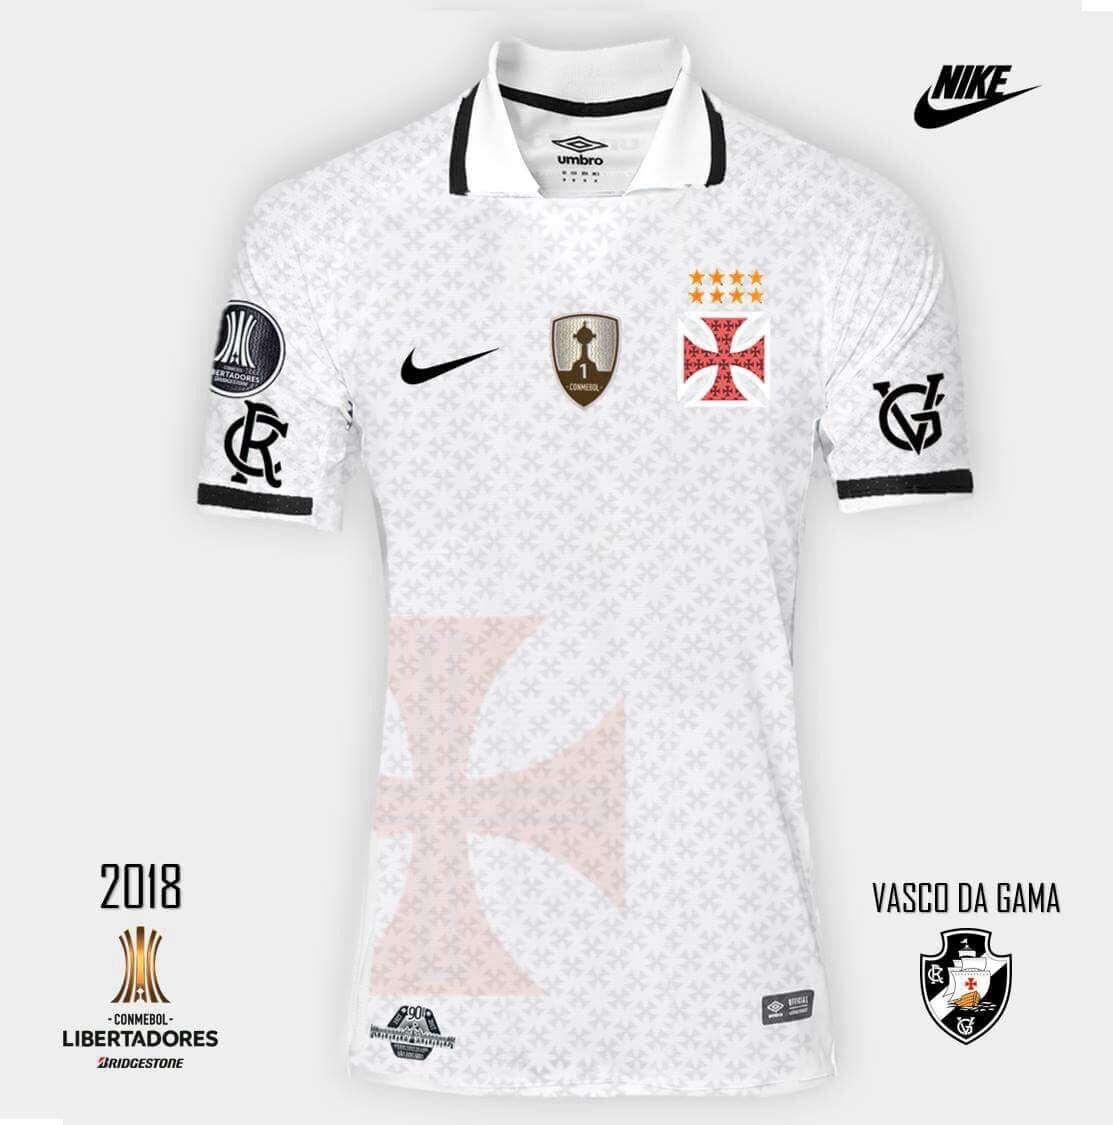 Mona Lisa Arsenal Lujoso João Tavares on Twitter: "E se o Vasco fechasse com a Nike e esse fosse o  3º uniforme, a torcida vascaína curtiria? https://t.co/1BuCgeCXLY" / Twitter